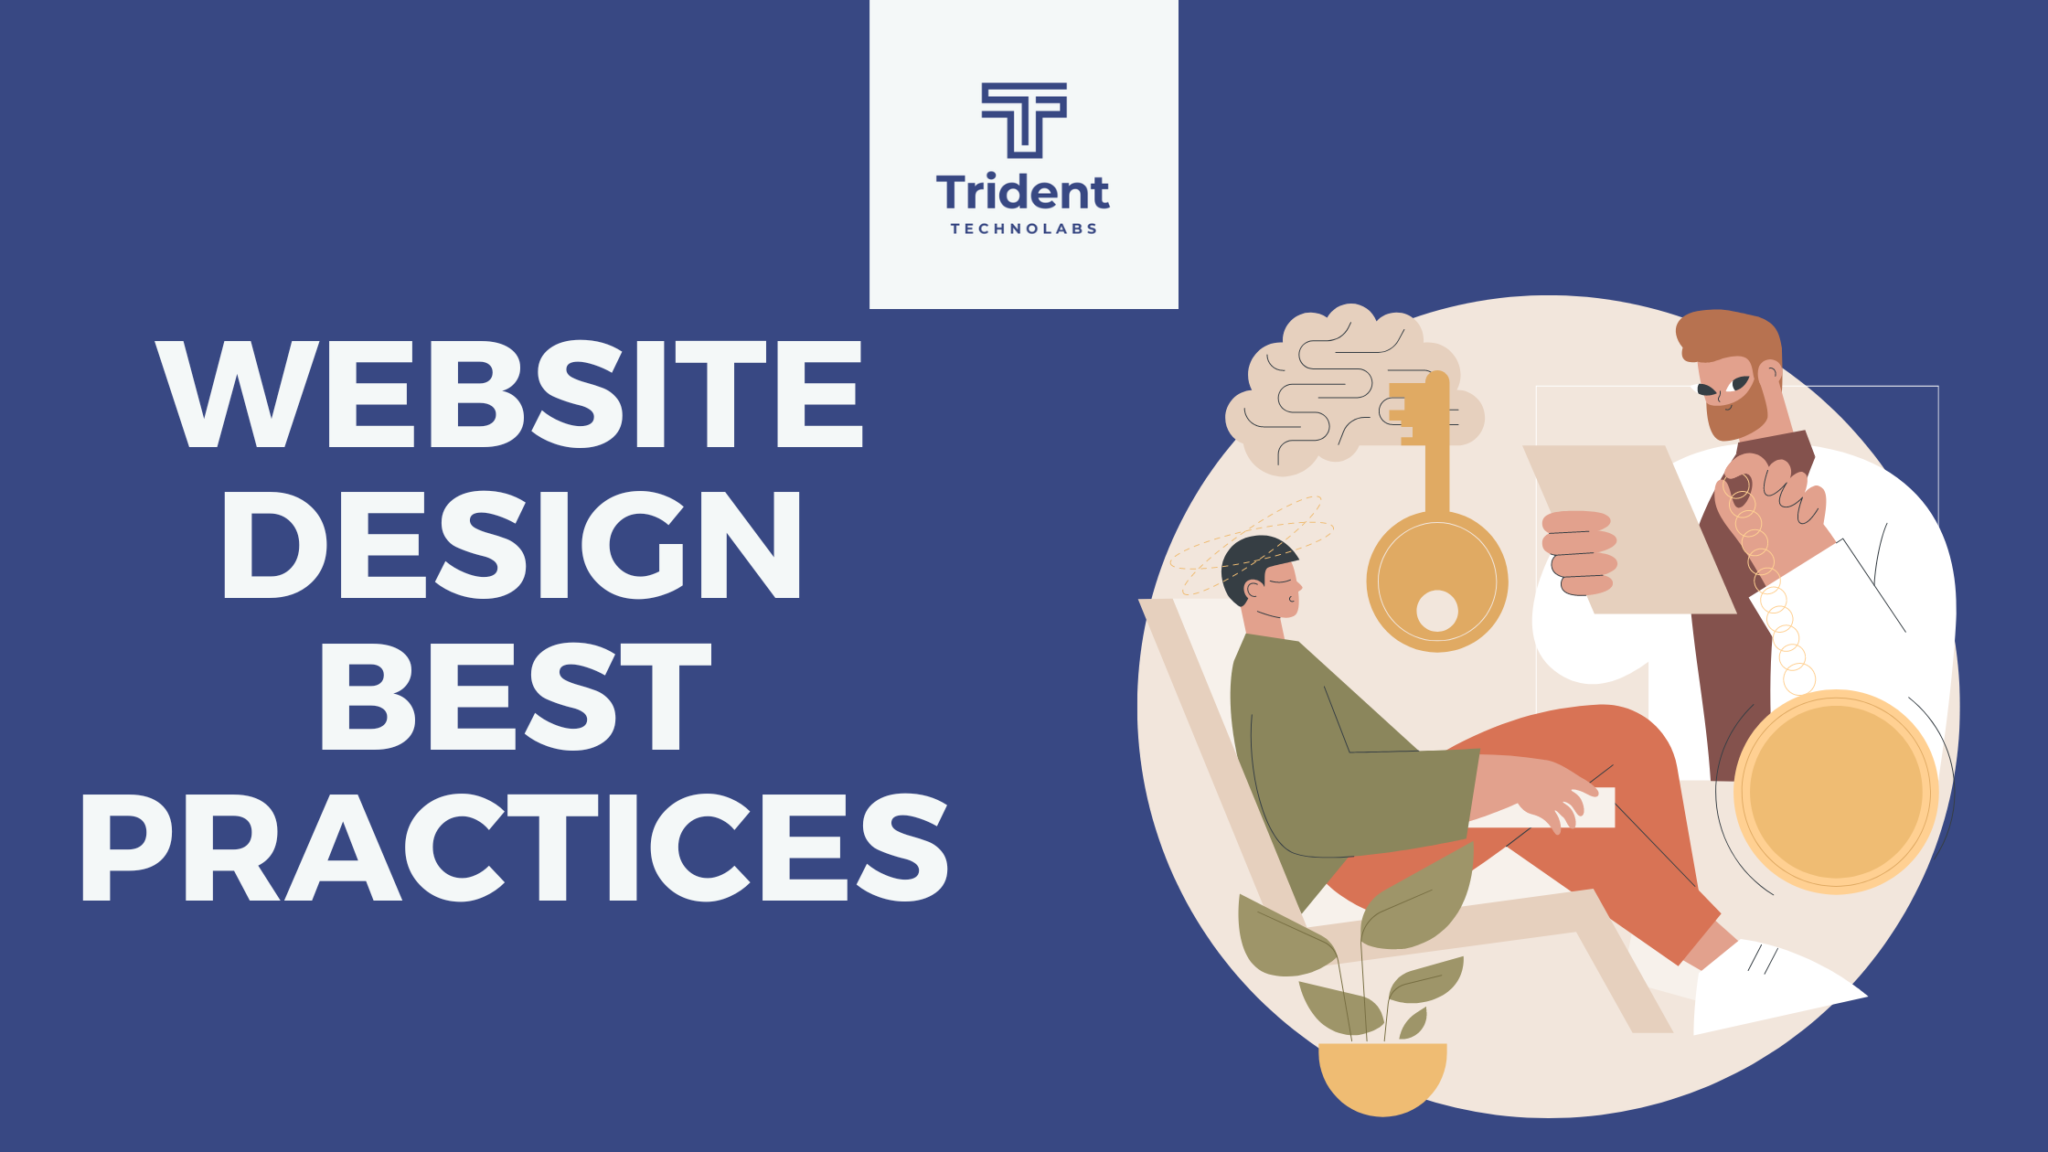 Website Design Best Practices Trident Technolabs